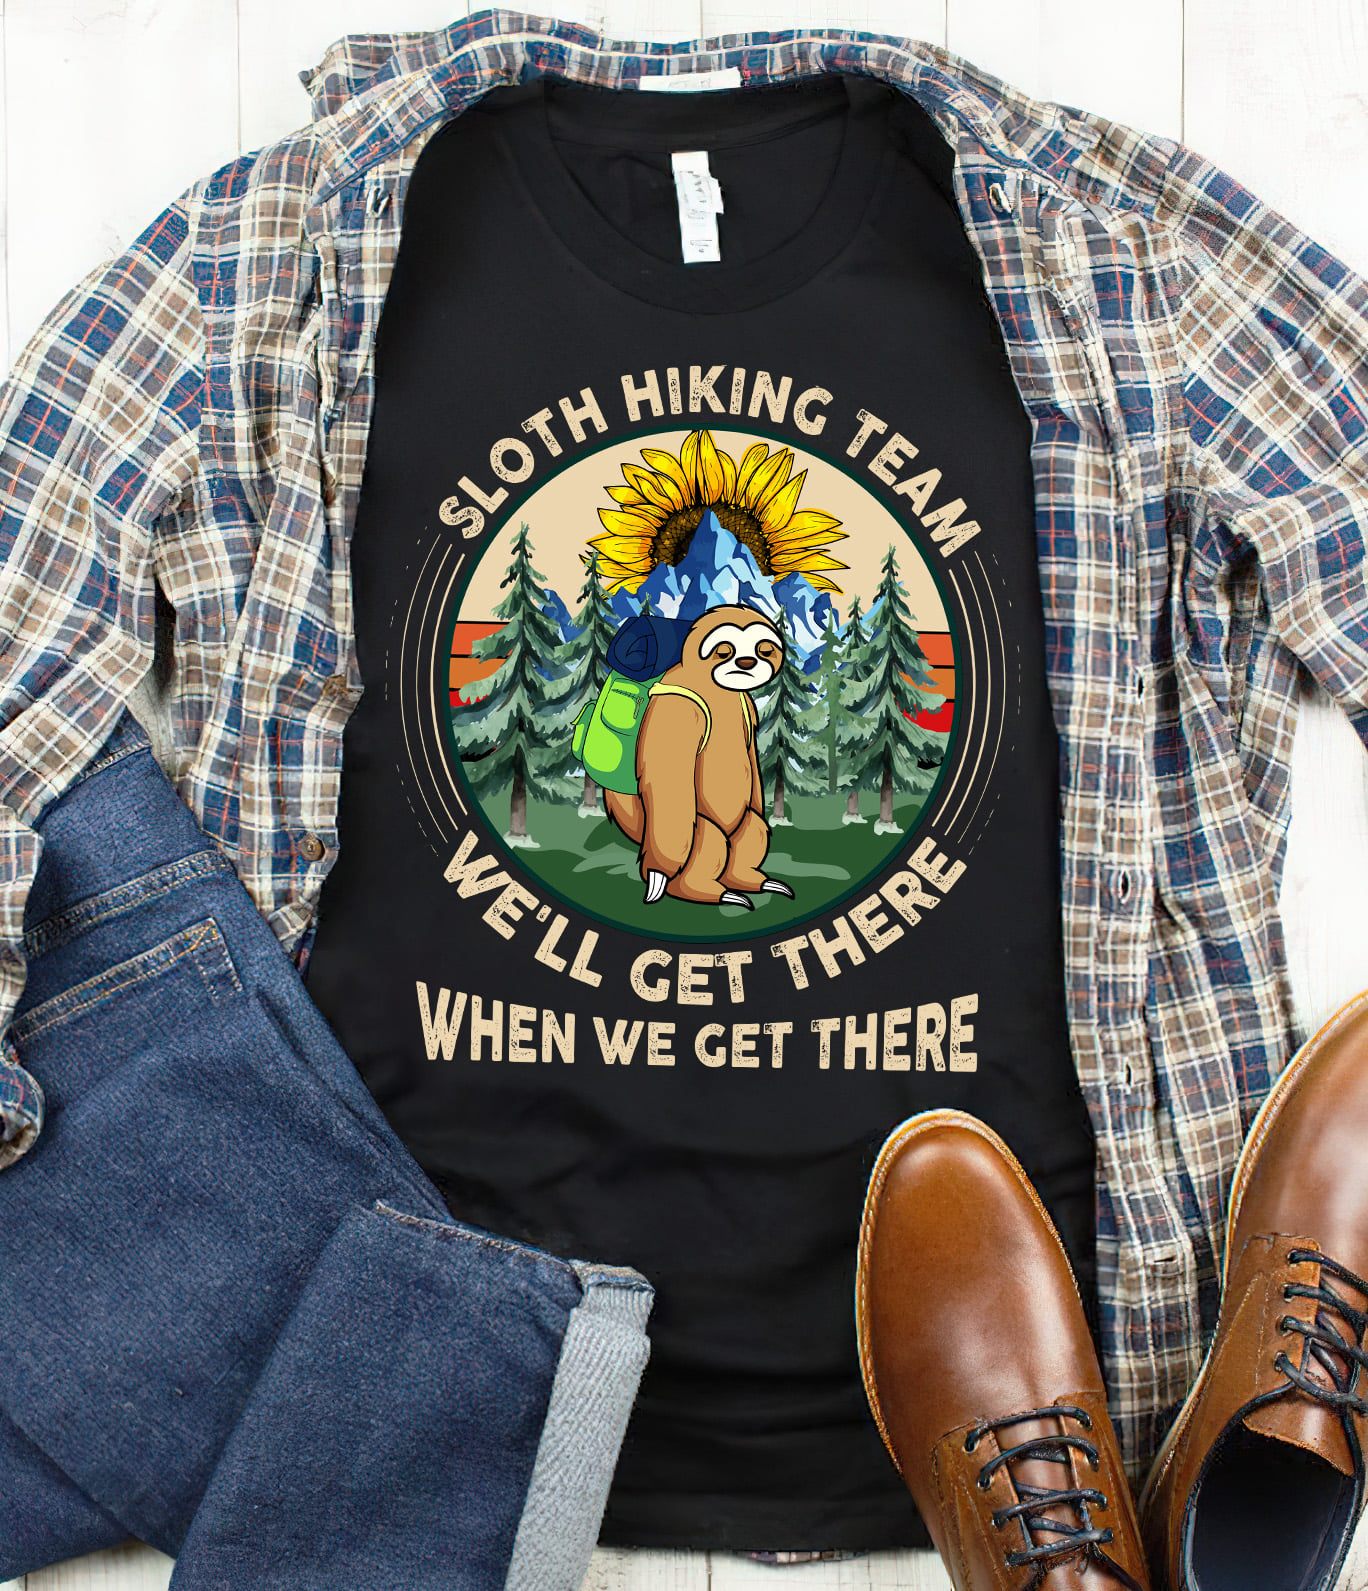 Sloth hiking team - Gift for hiking people, sloth go hiking